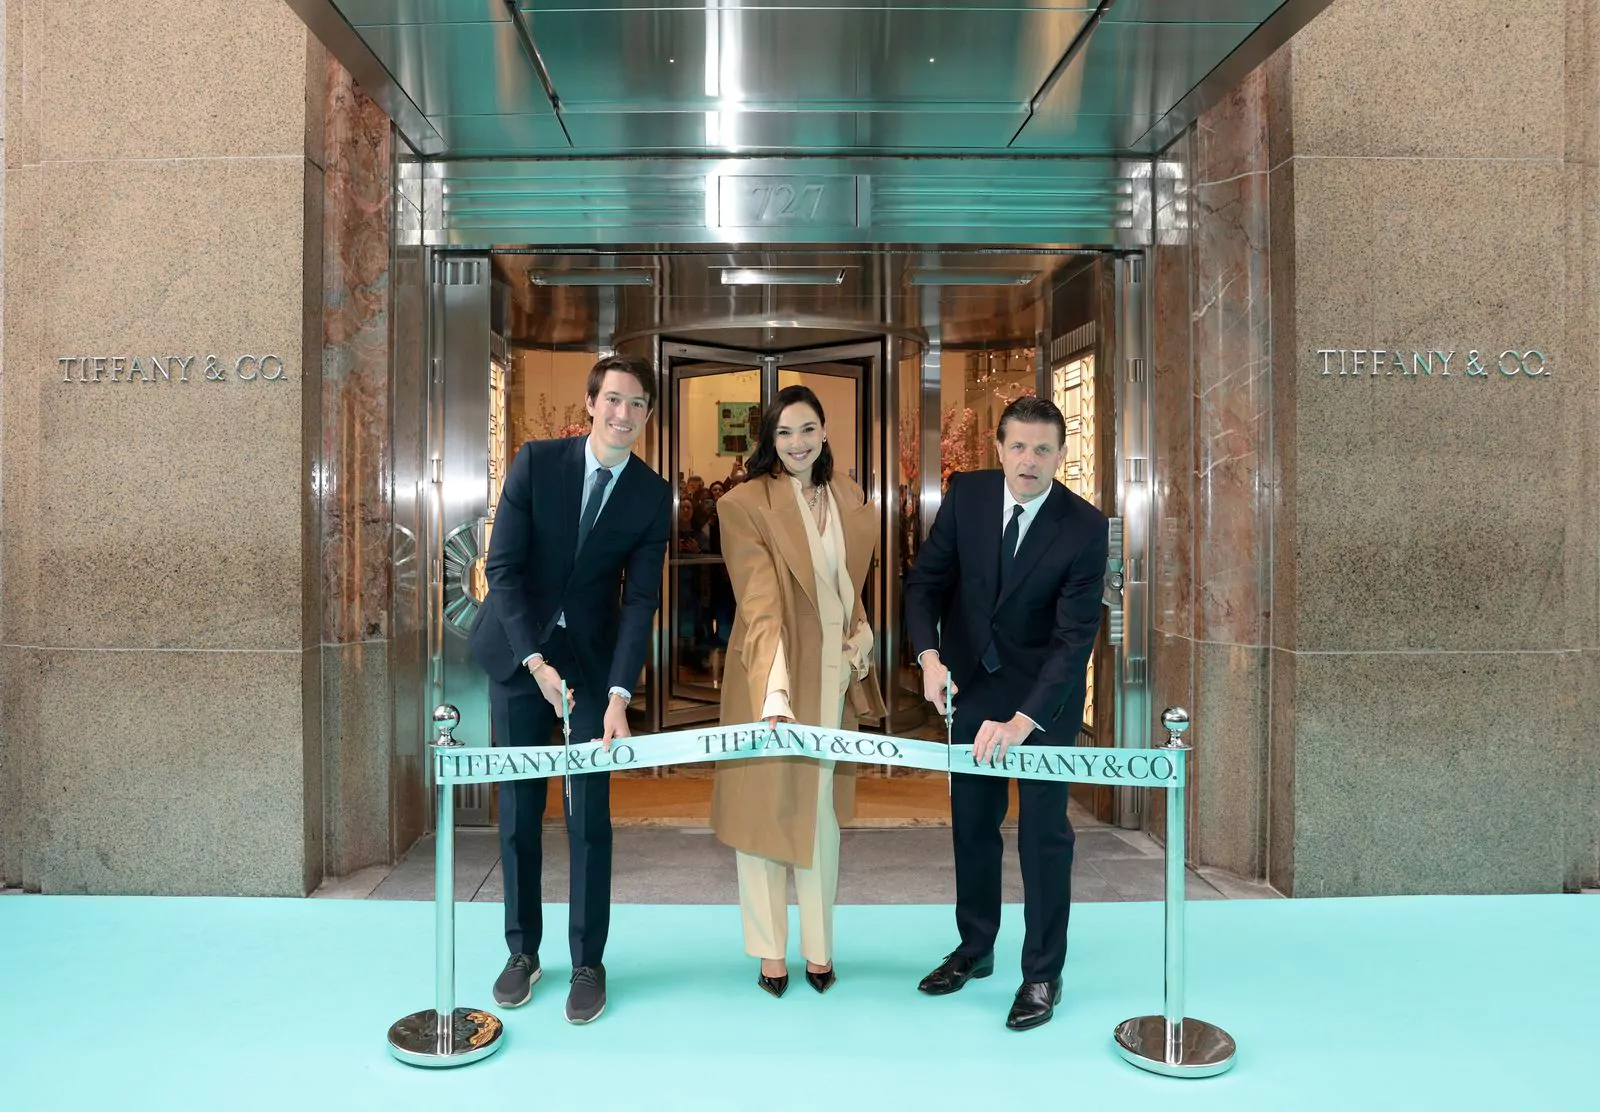 Александр Арно, Галь Гадот и Энтони Ледру на открытии магазина Tiffany & Co., фото 2